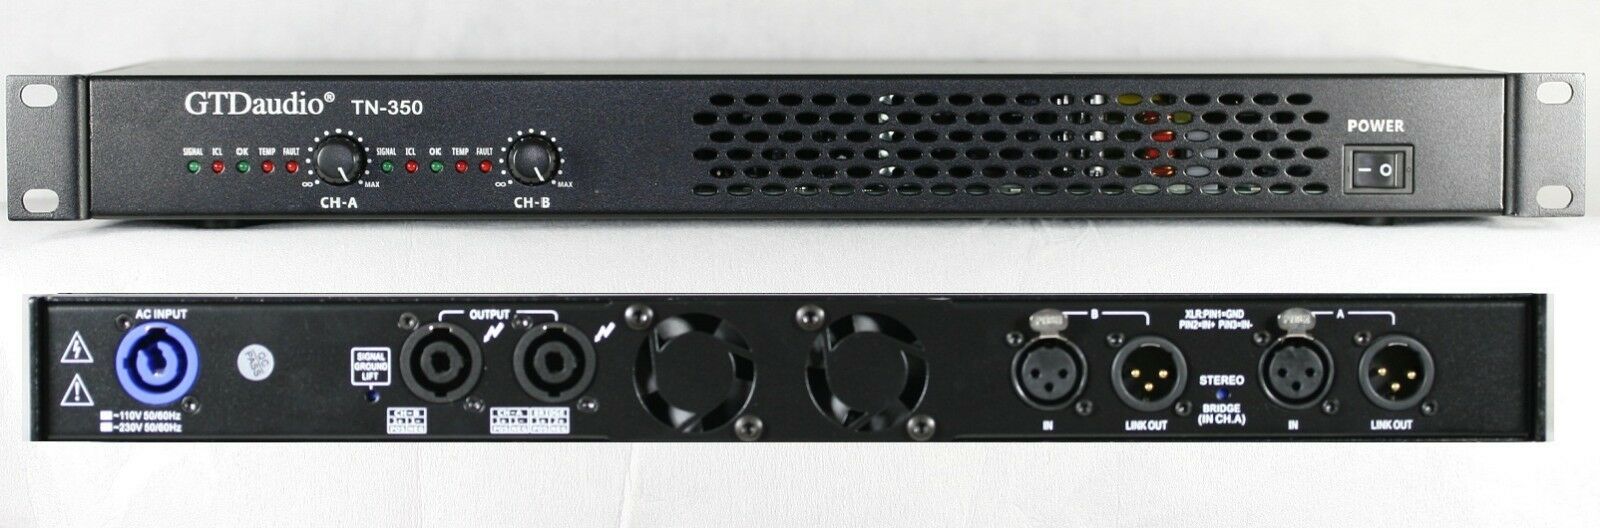 2 Channel 6500 Watts Professional Power Amplifier Amp Stereo Gtd-audio Tn-350